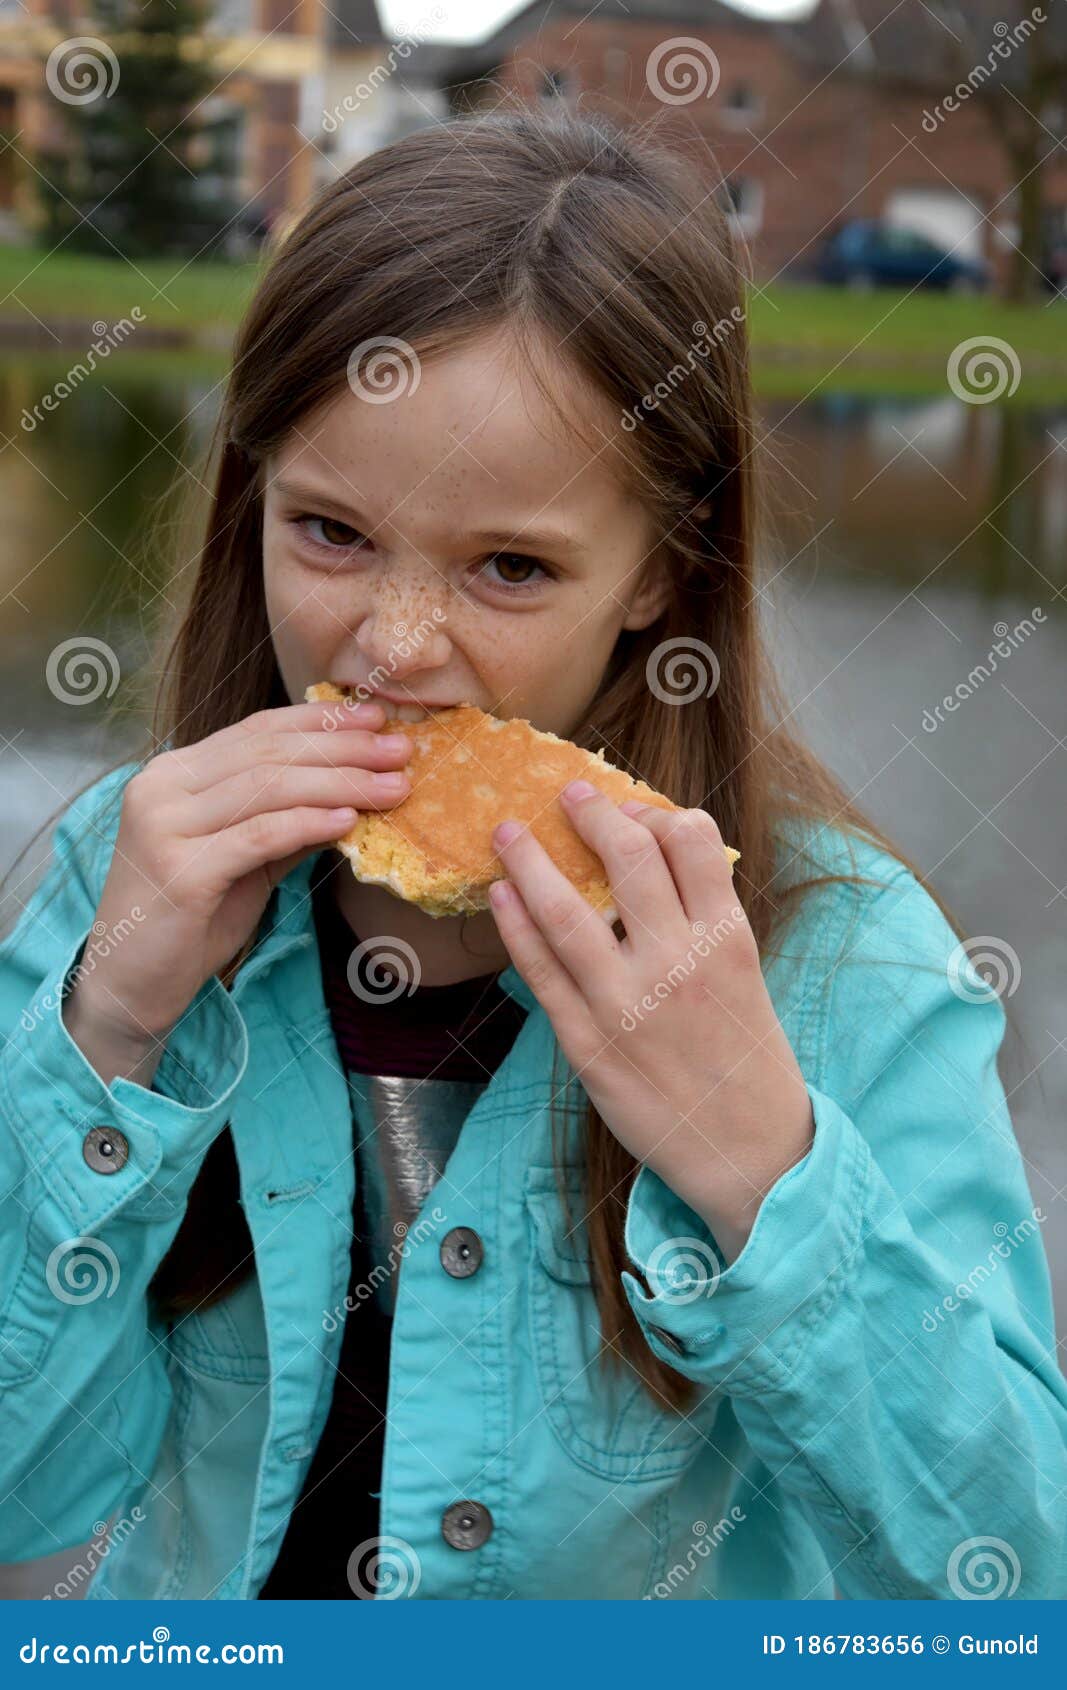 girl eats a slice of crumble cake